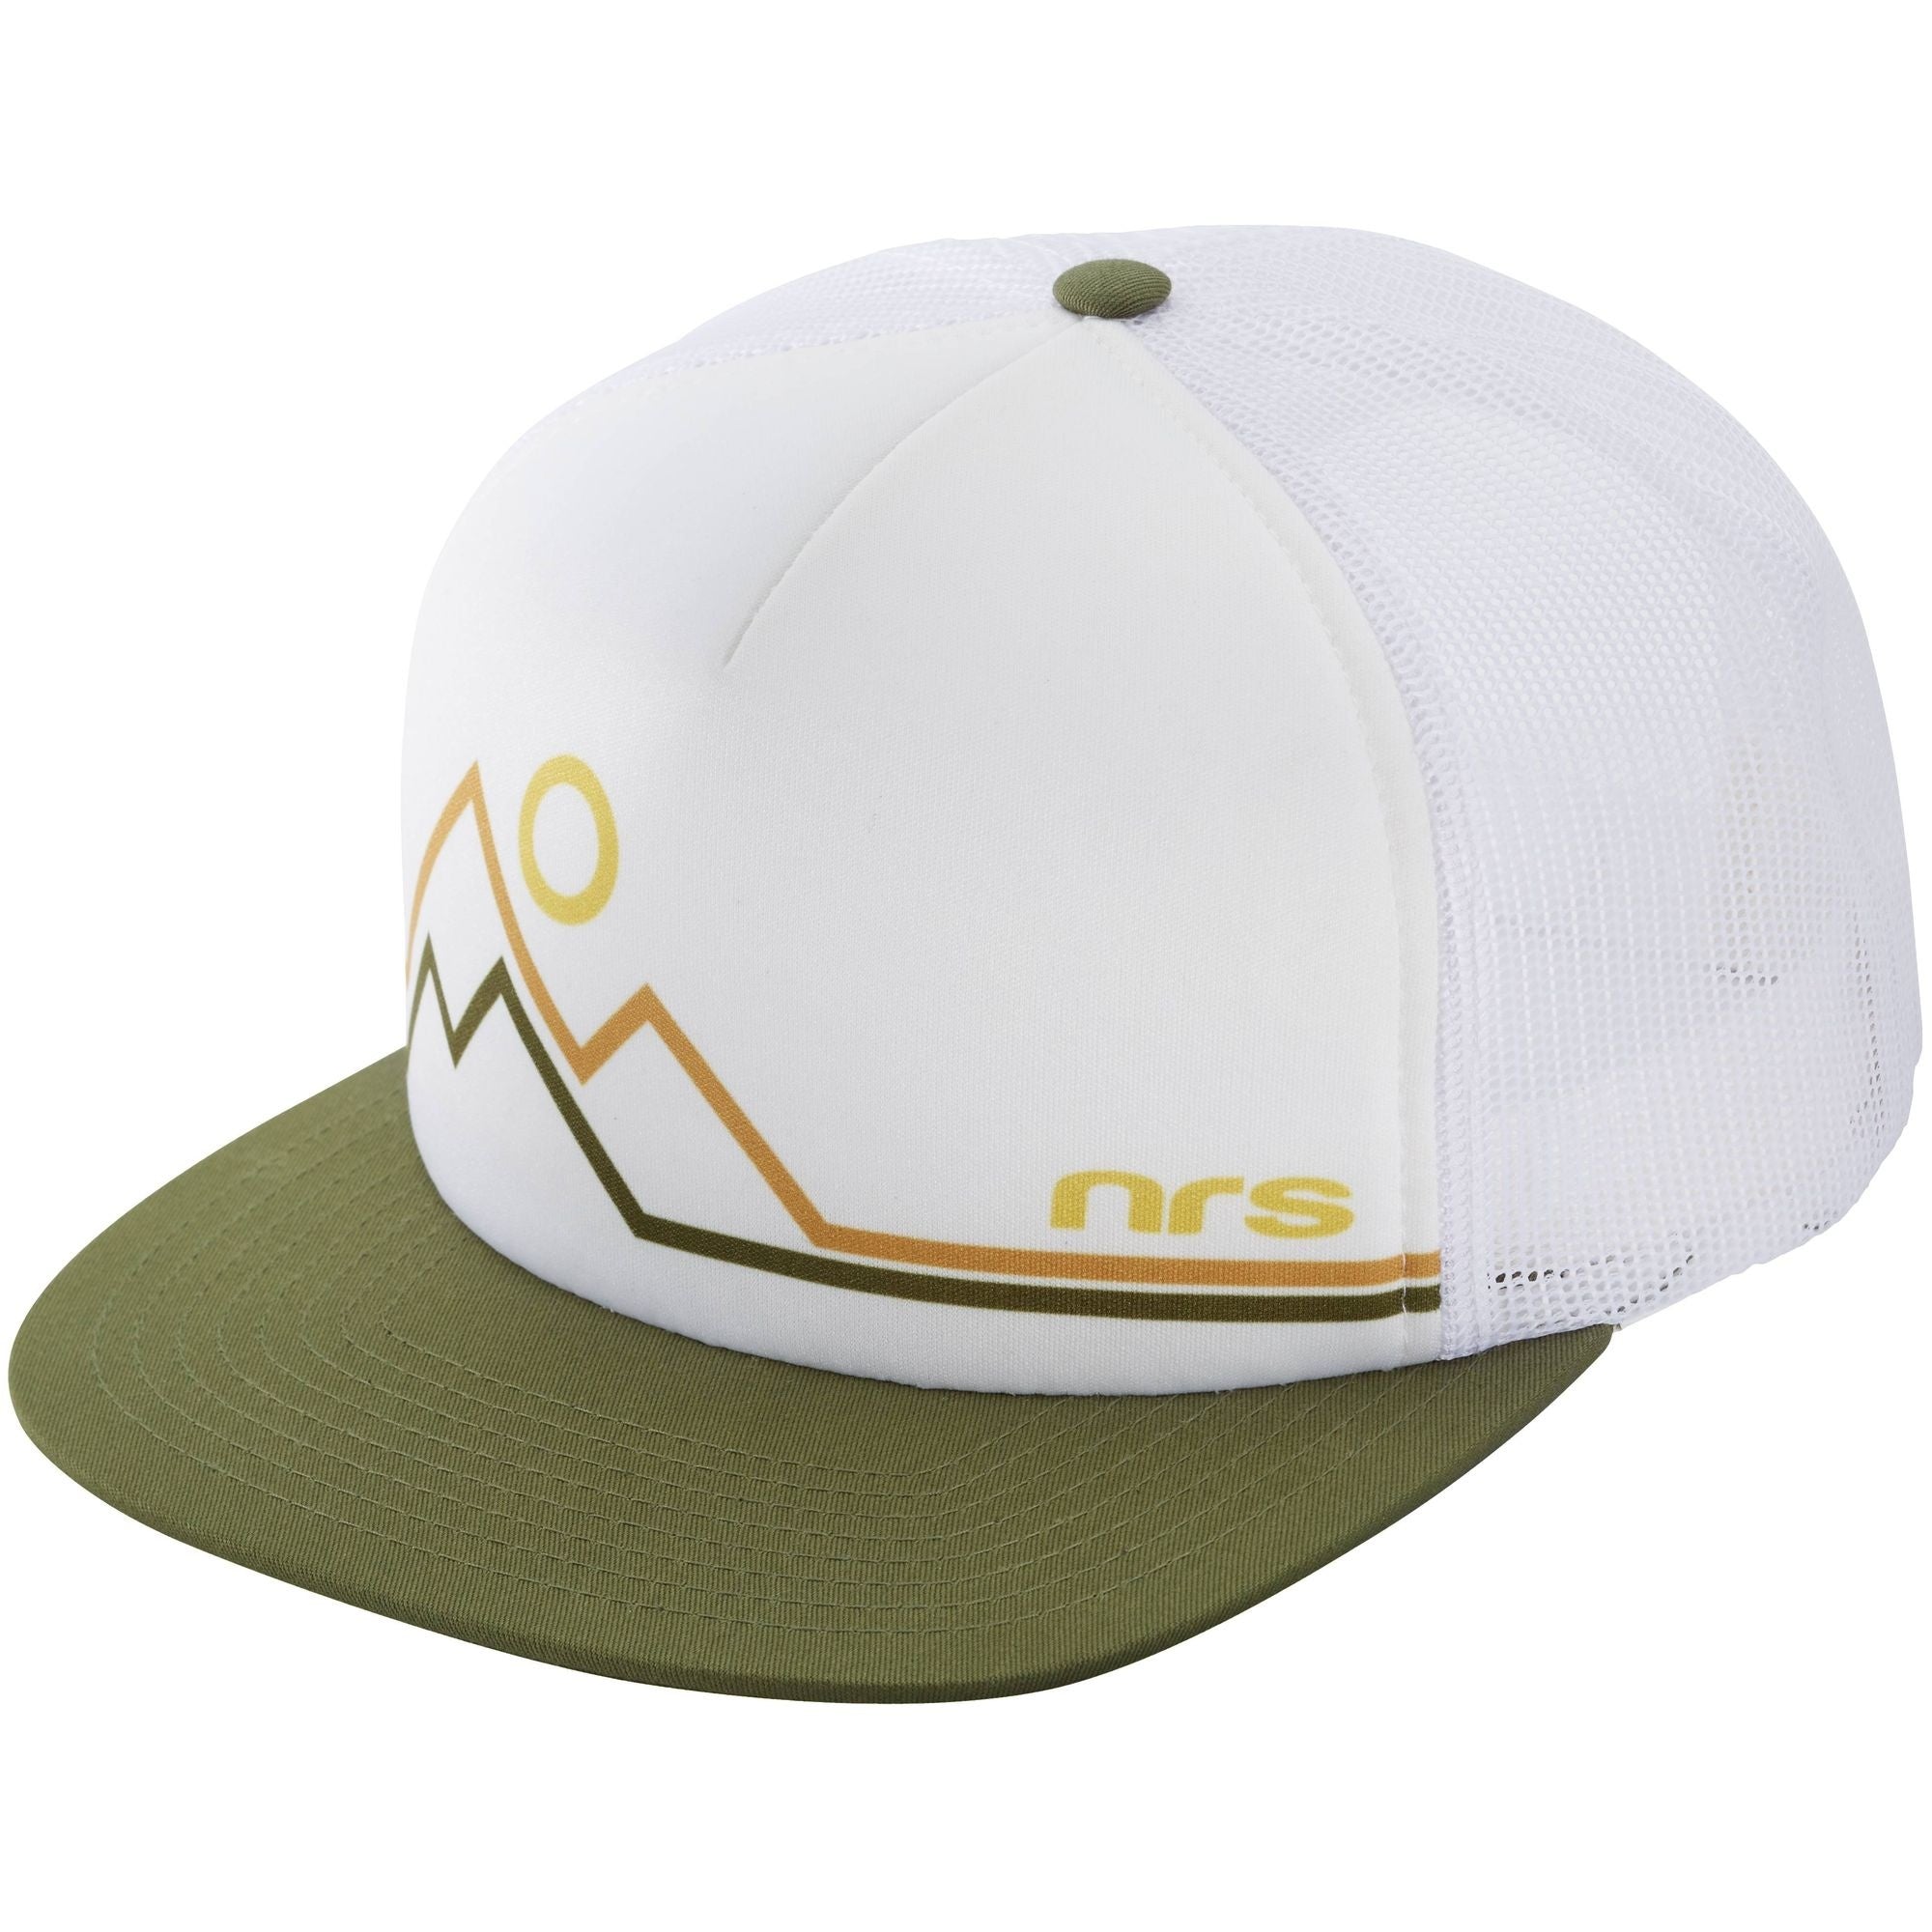 NRS - River Hat, Mountain Print